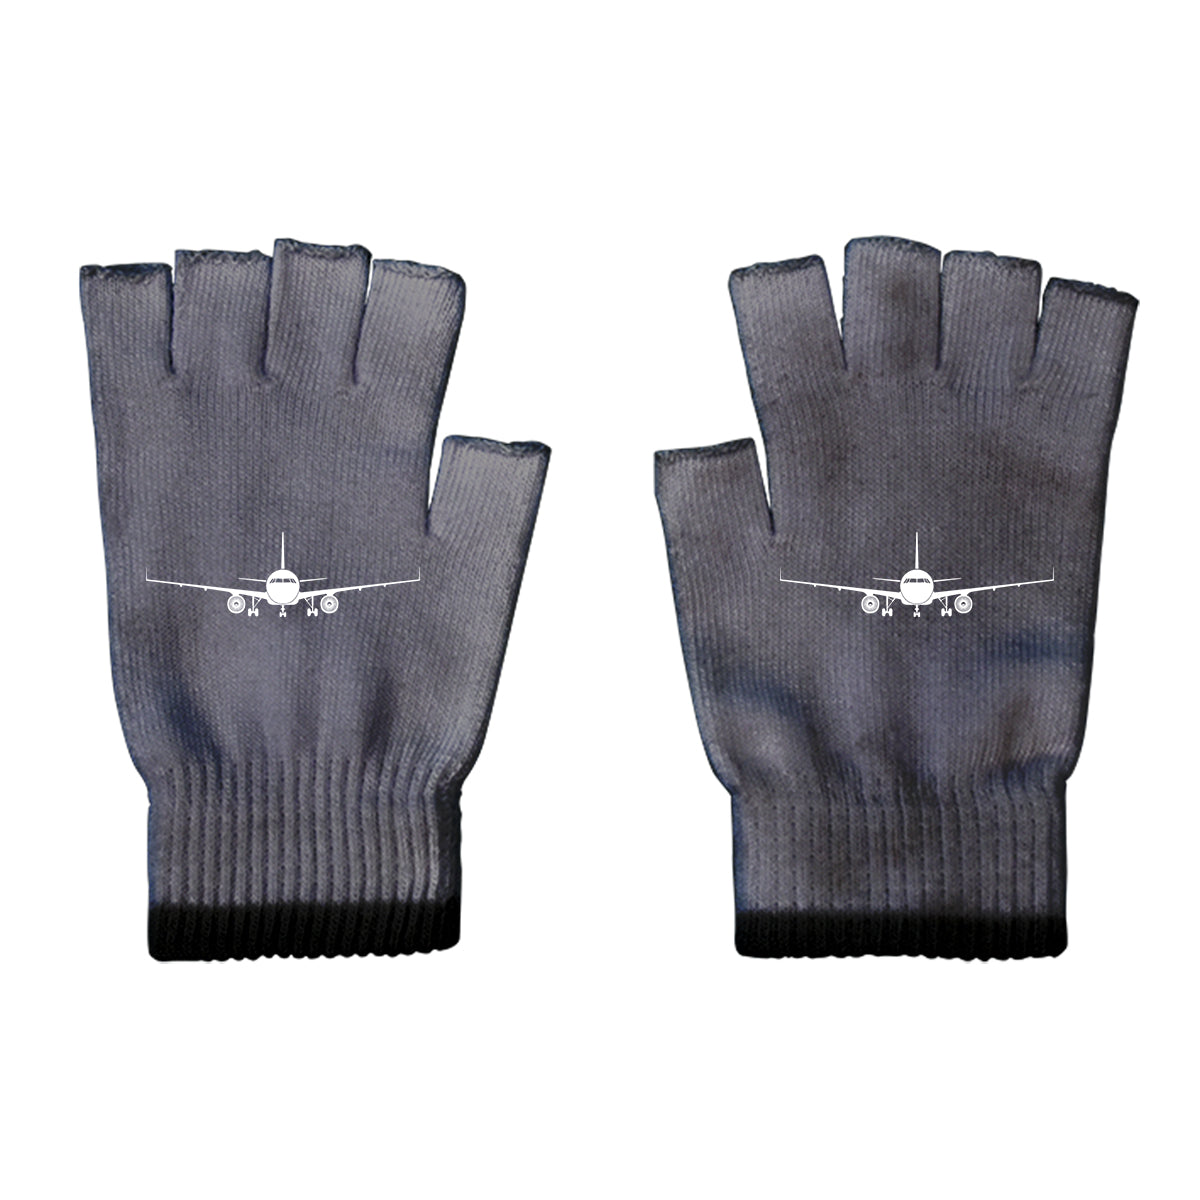 Airbus A320 Silhouette Designed Cut Gloves